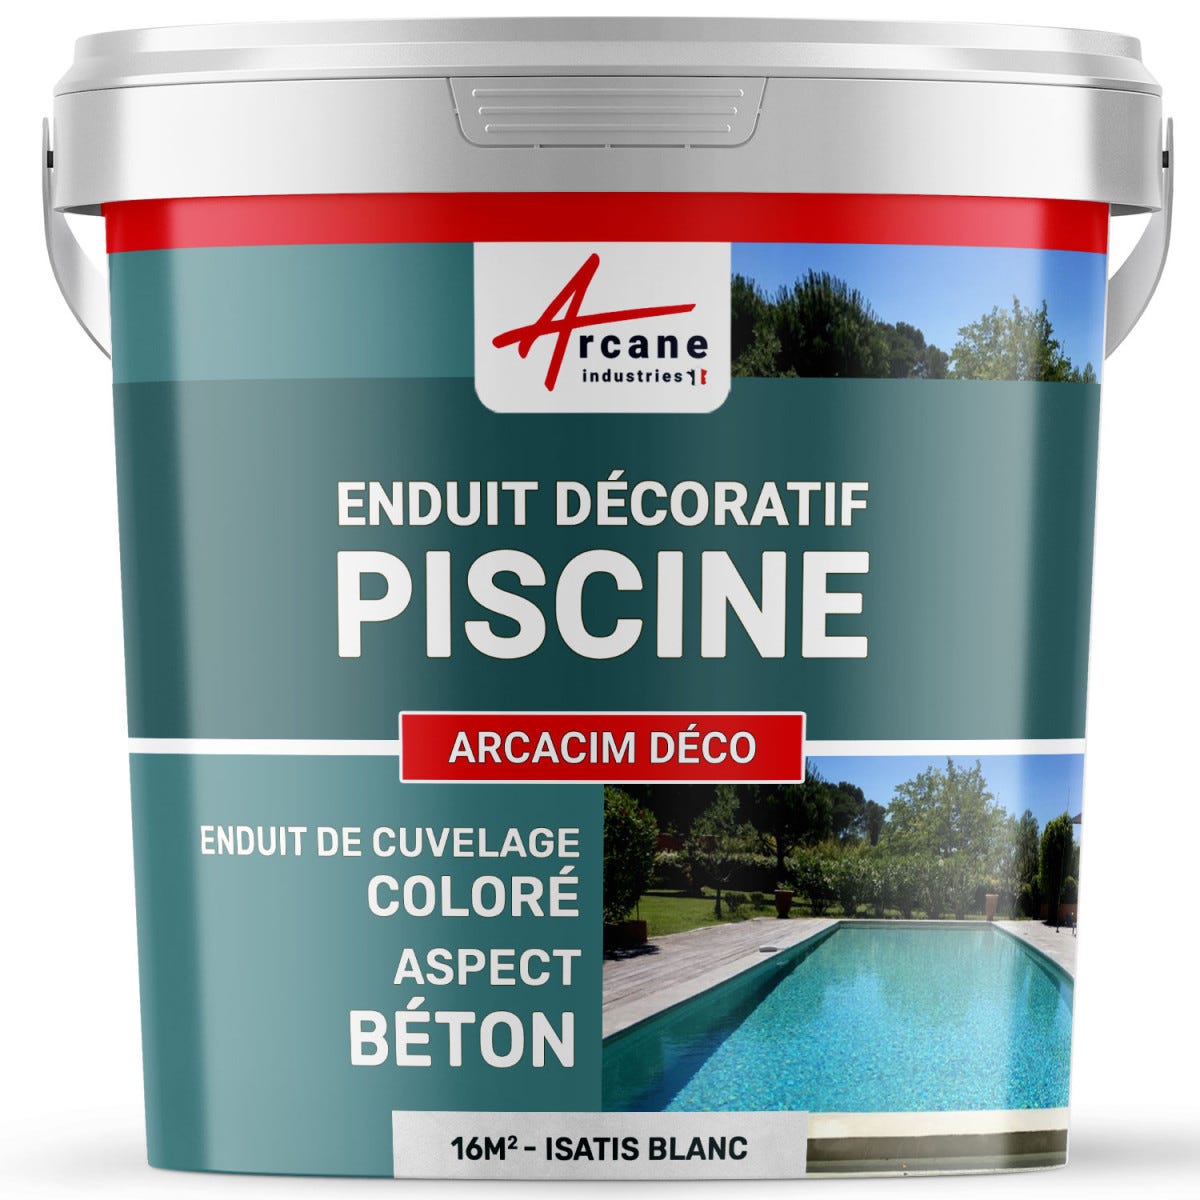 ENDUIT DE CUVELAGE PISCINE FINITION BETON CIRE - ARCACIM DECO - 16 m² - Isatis Blanc - ARCANE INDUSTRIES 0